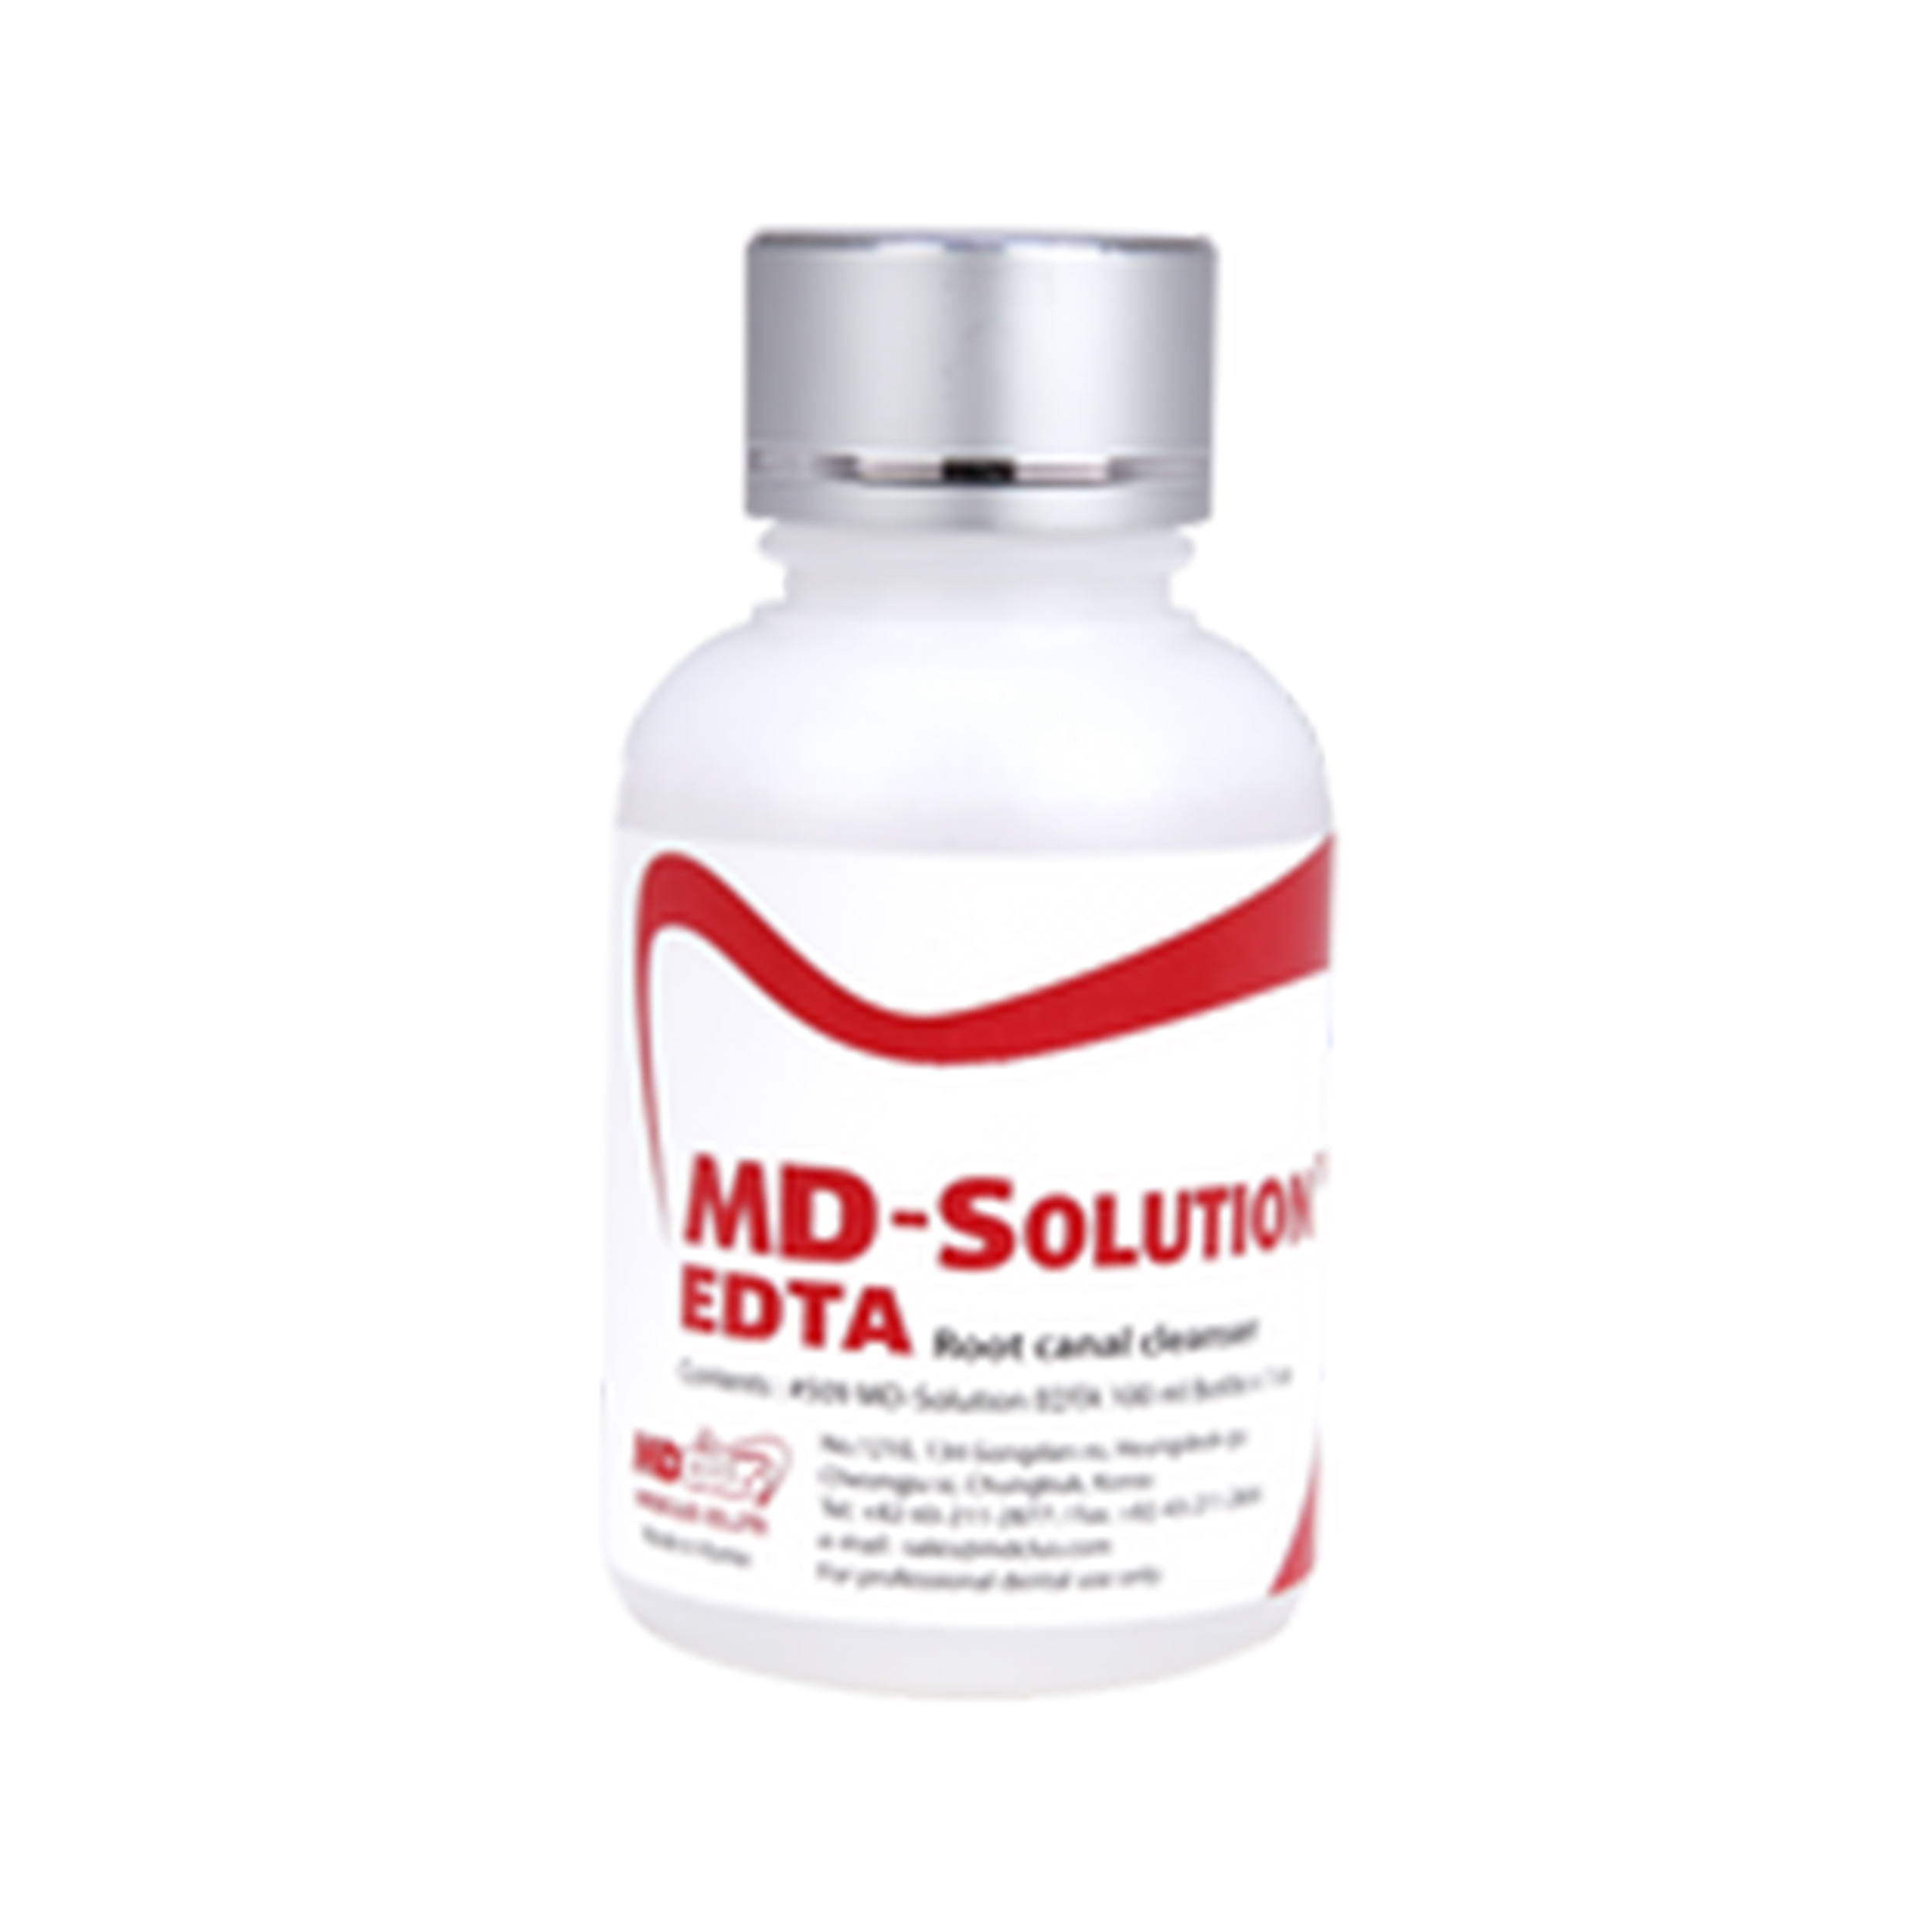 Mediclus MD-Solution EDTA 100ml (Expiry Date 25/09/2024)